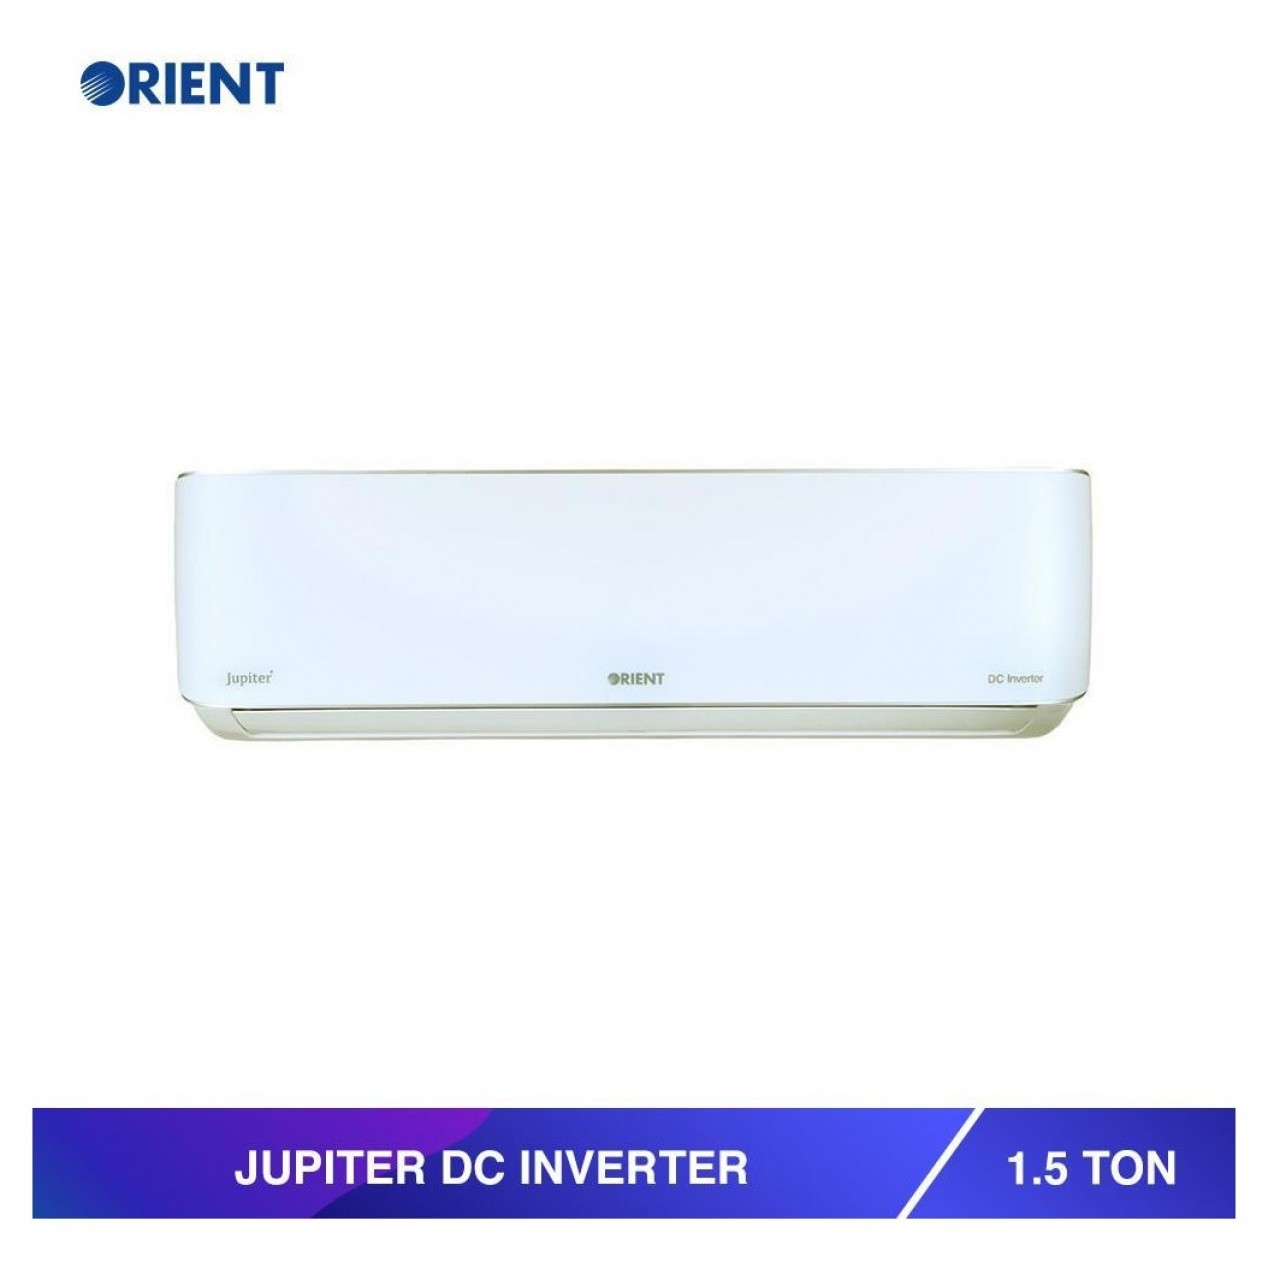 Orient DC Inverter Air Conditioner Jupiter Gold Fin – 1.5 Ton – Double Layer Condenser – Saves 60